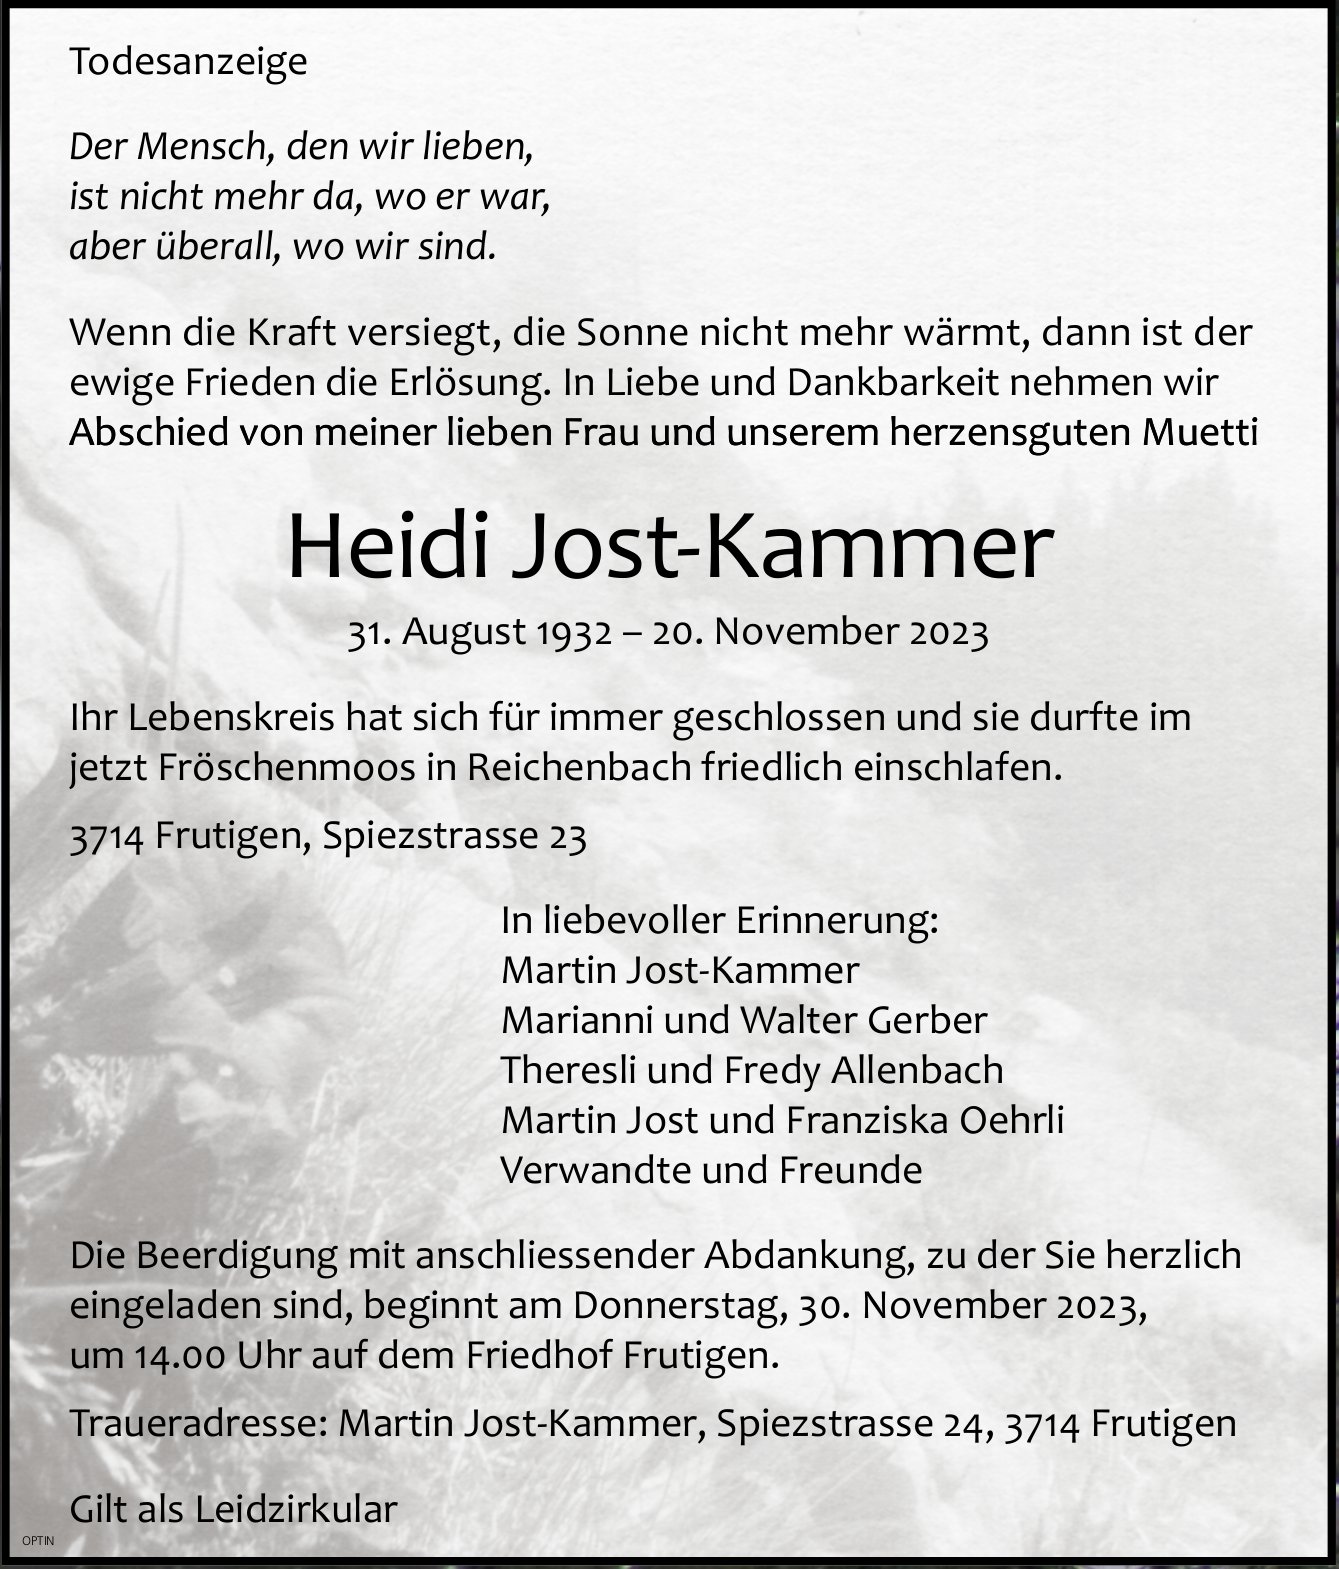 Heidi Jost-Kammer, November 2023 / TA